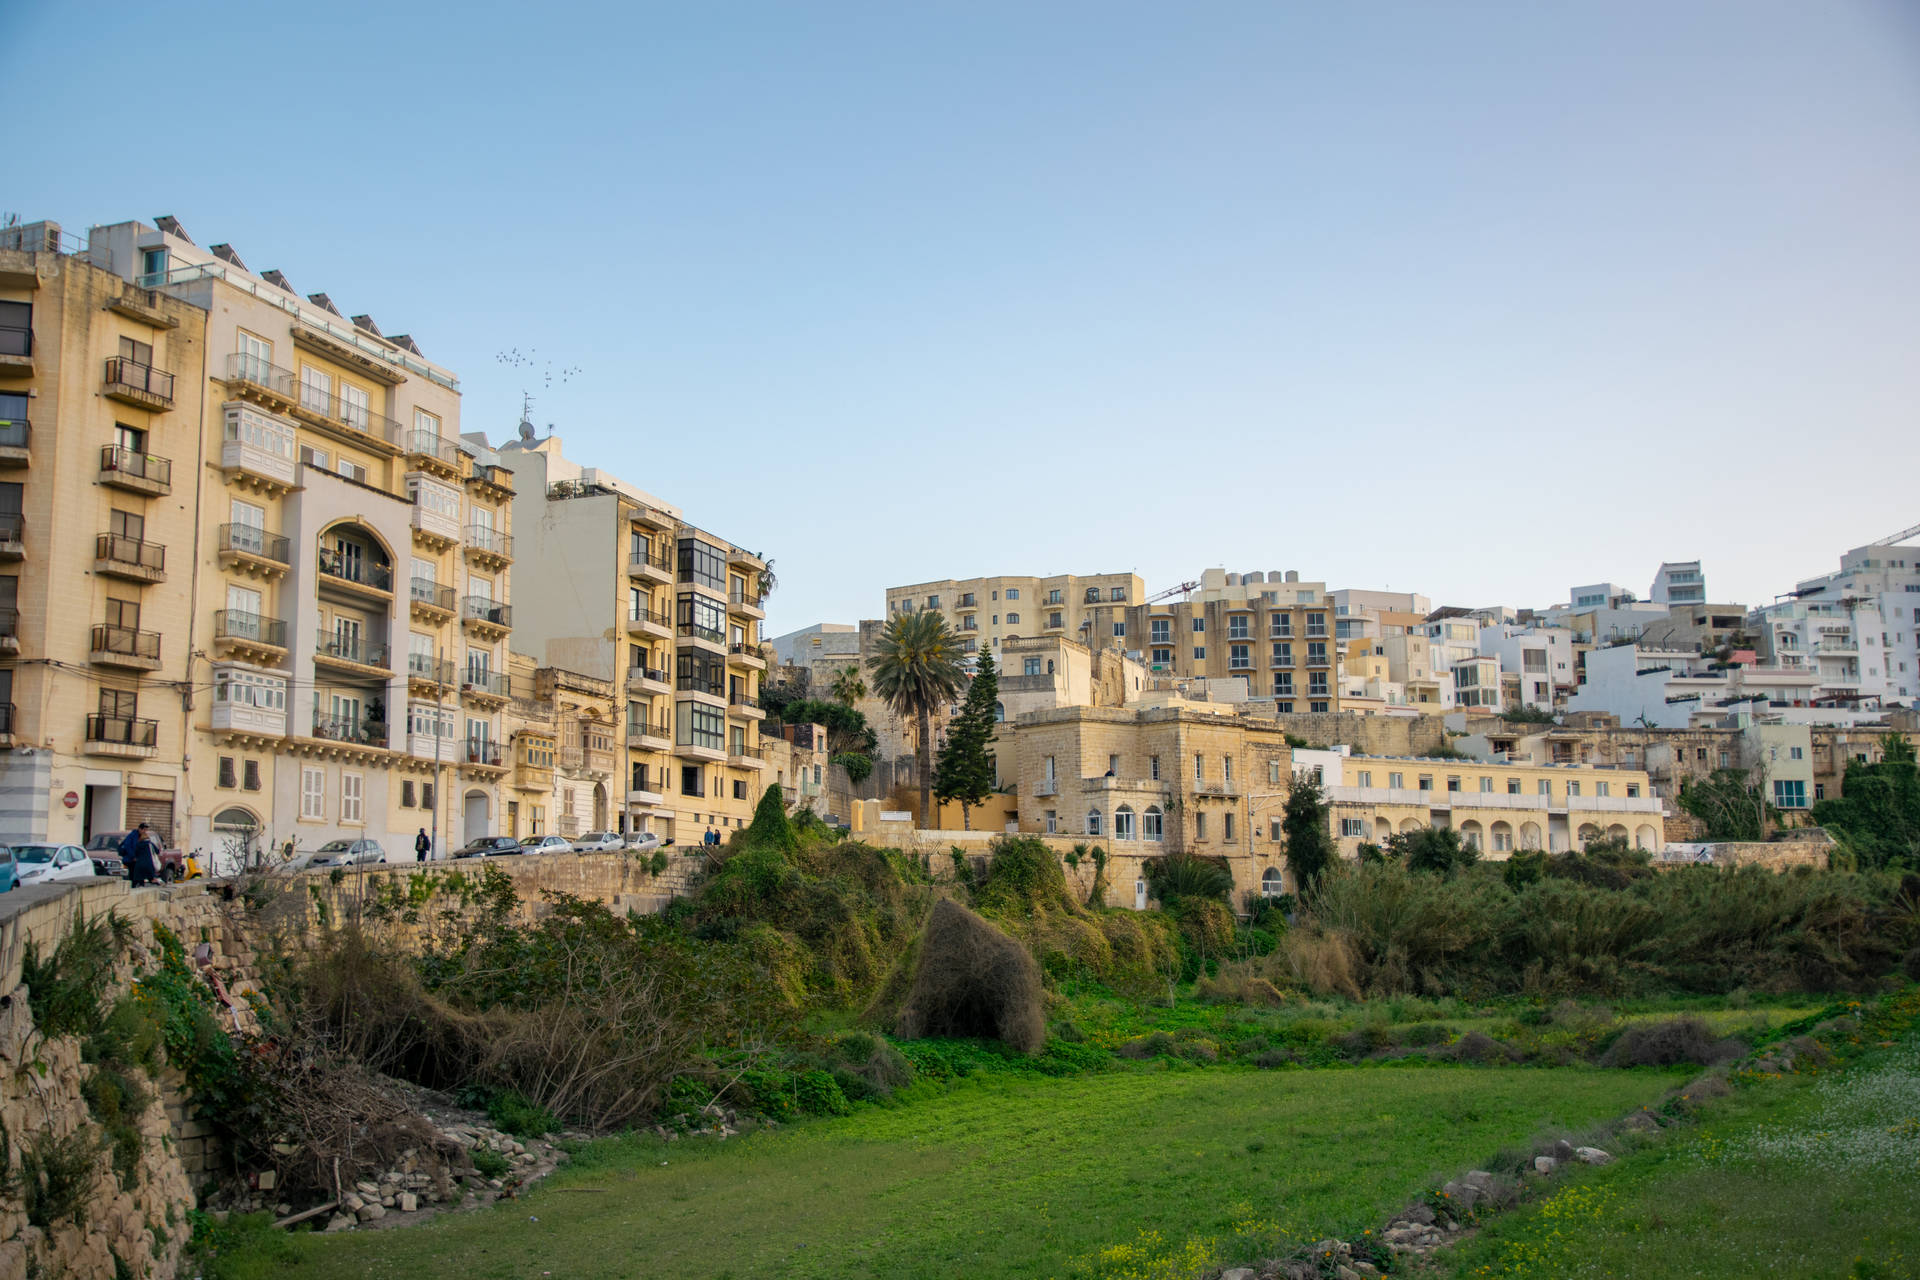 Marriott Hotel And Spa Malta Background